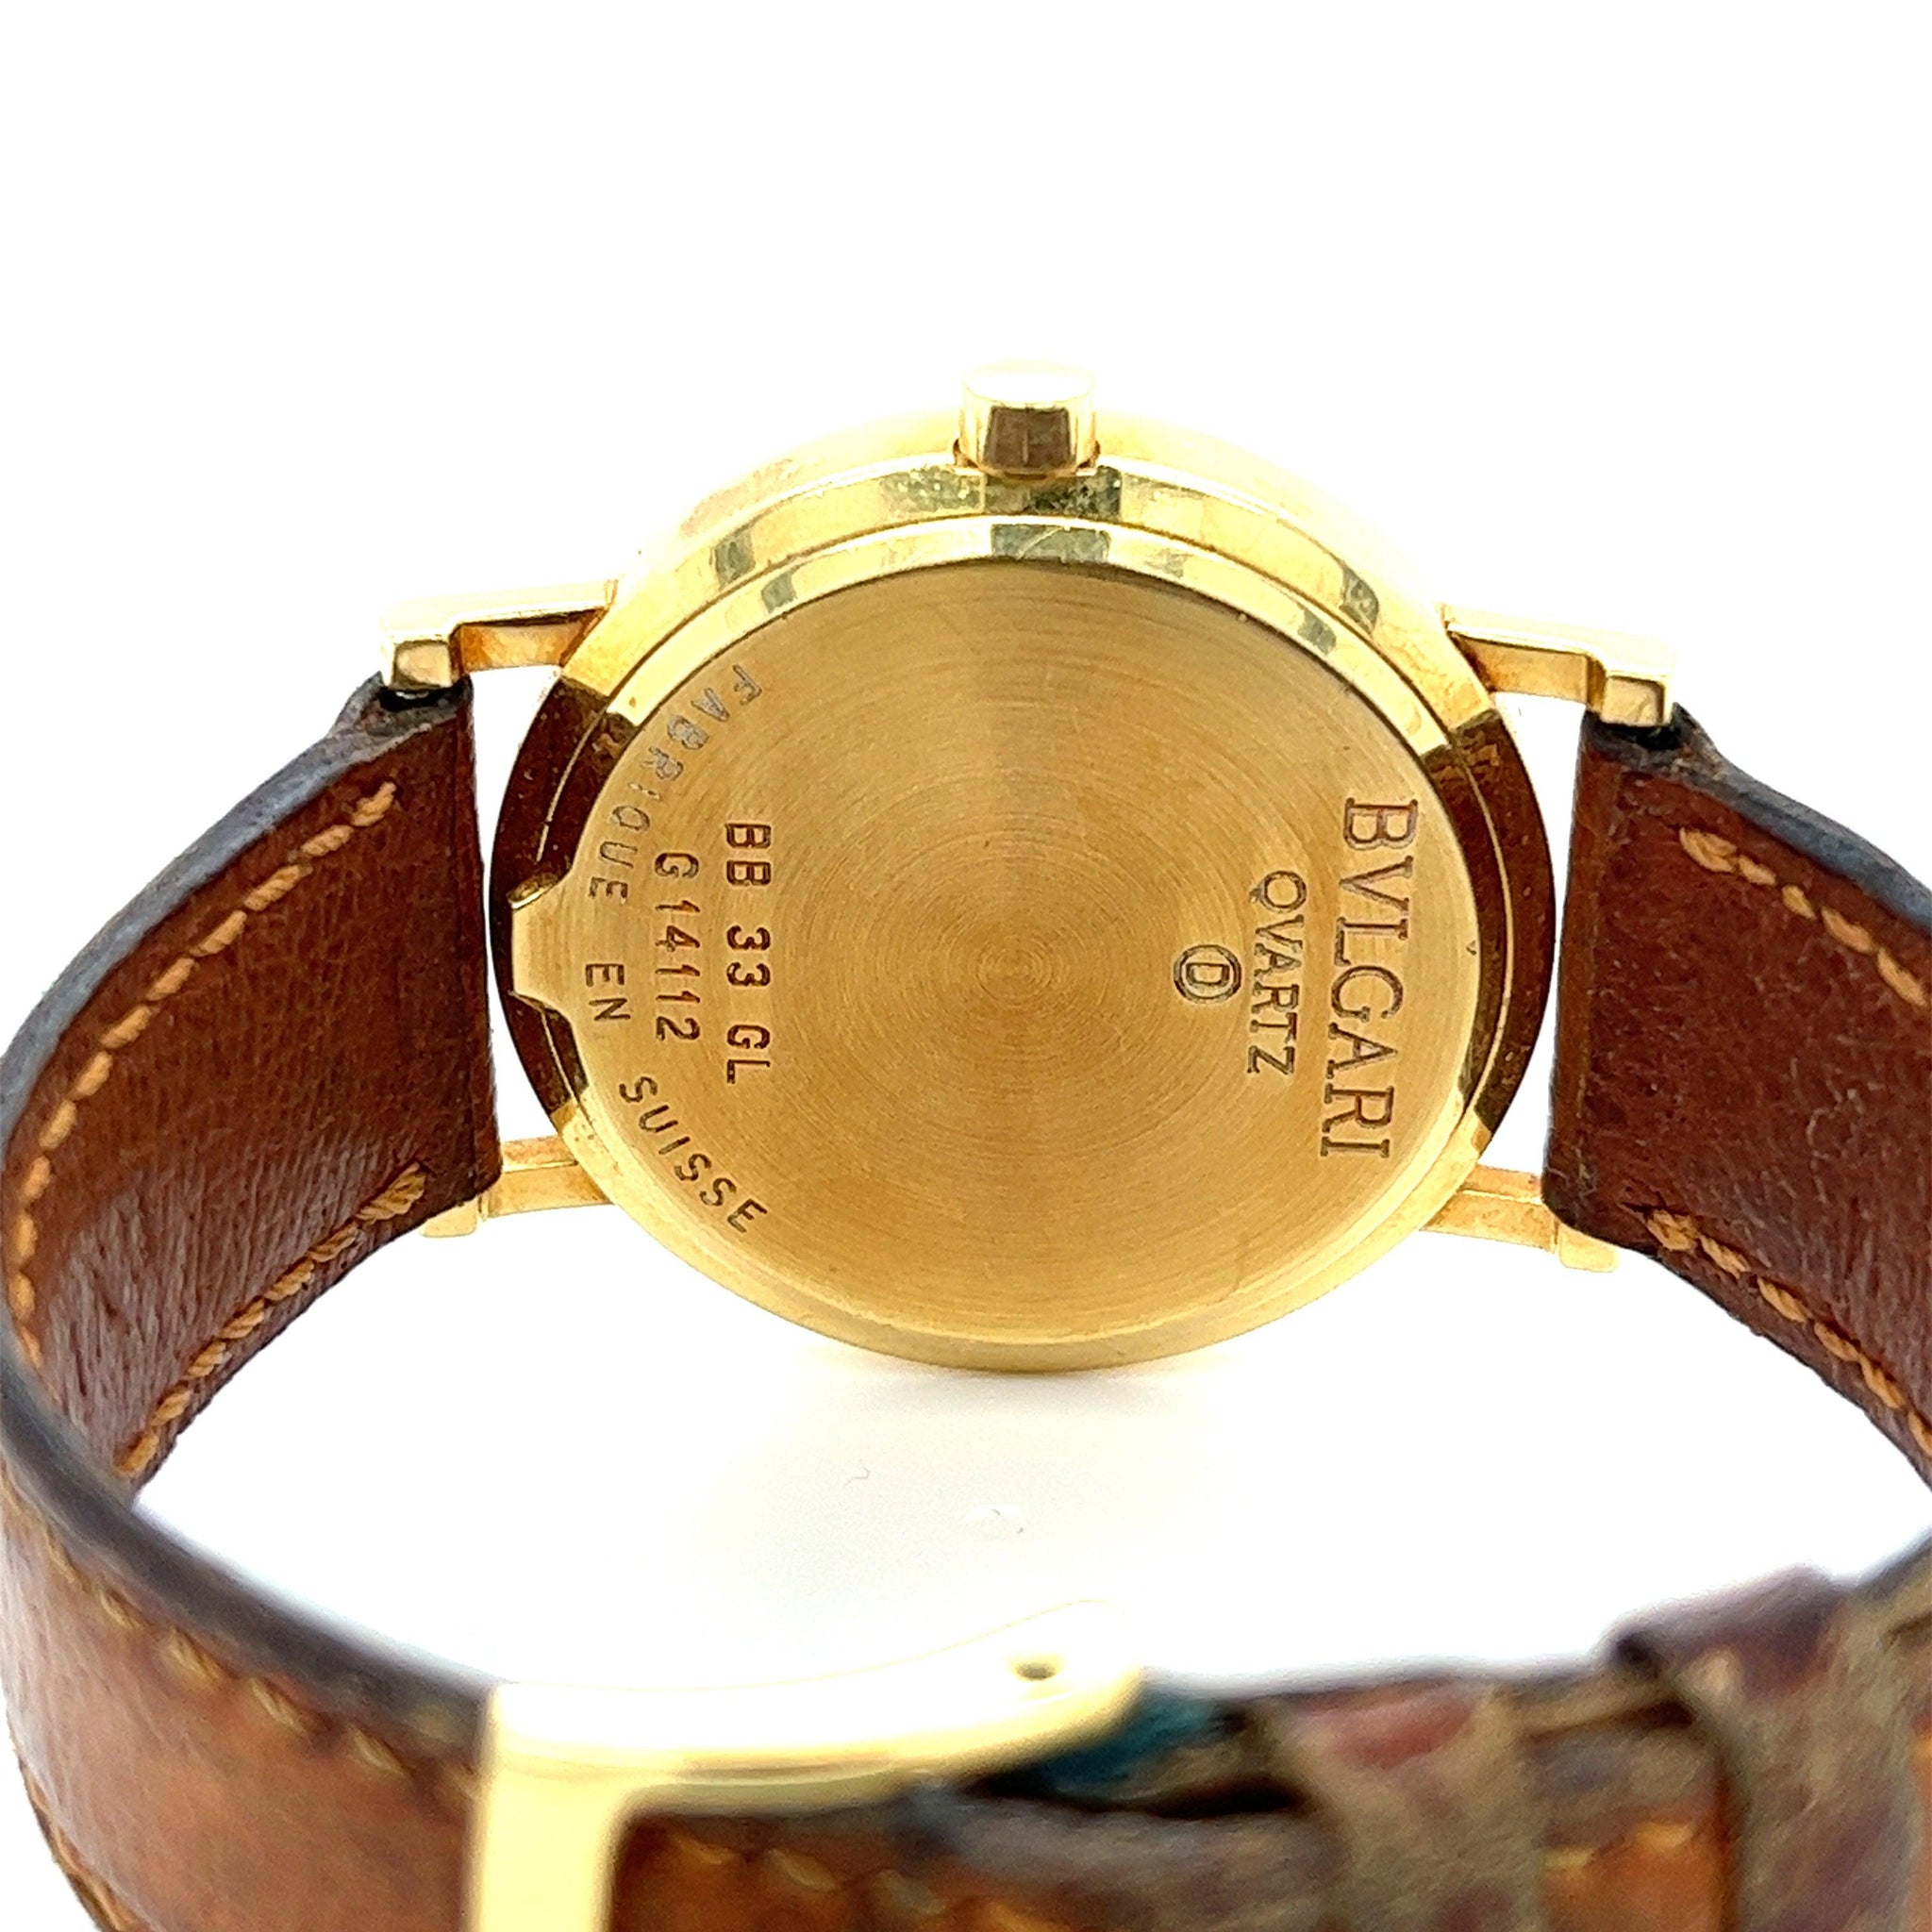 Bvlgari Bvlgari Man Collection: Watches